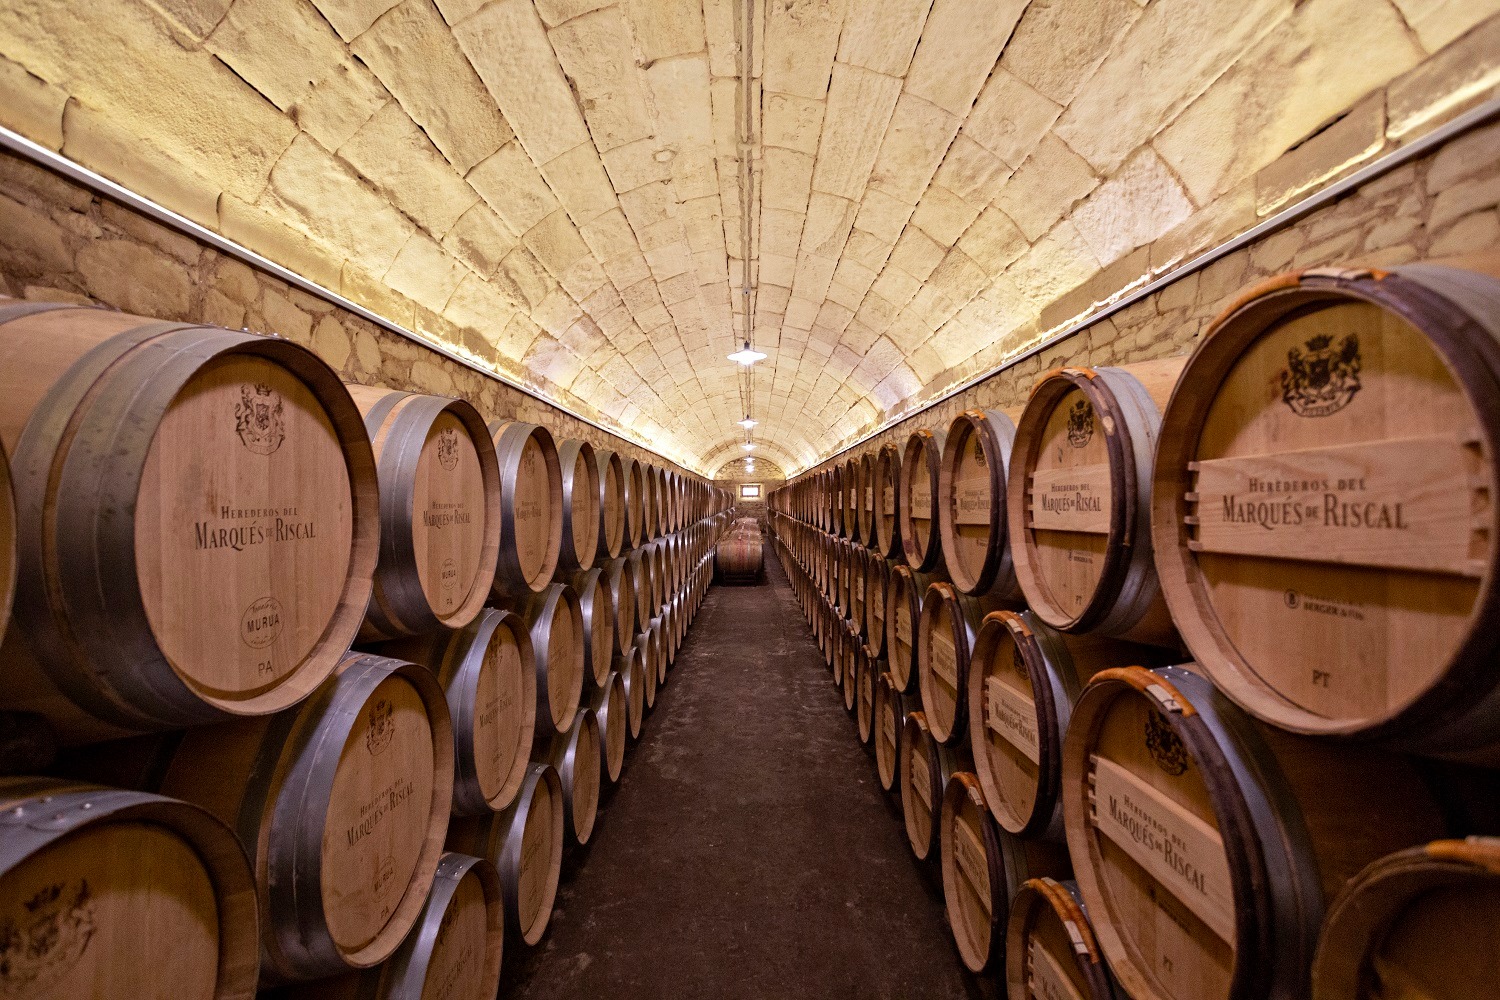 Marques de Reserva 2016 Rioja Riscal